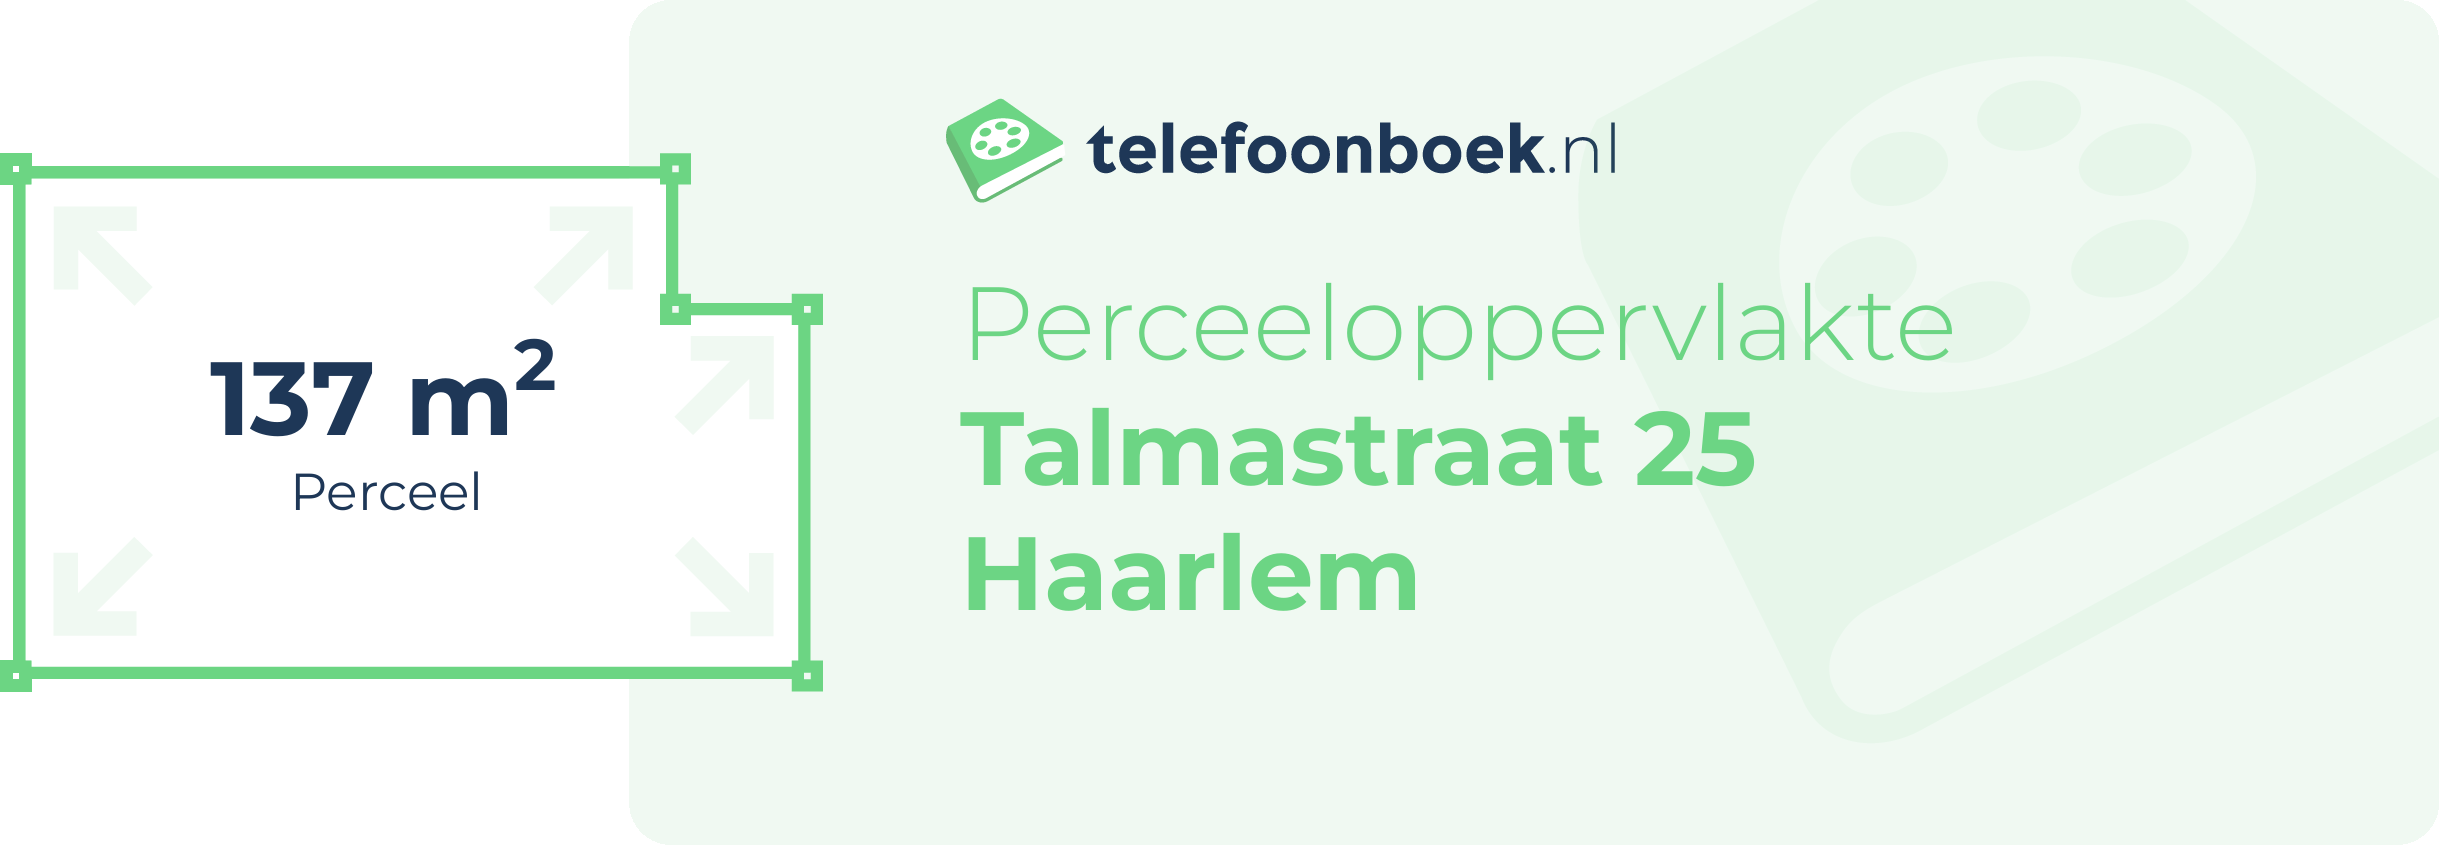 Perceeloppervlakte Talmastraat 25 Haarlem